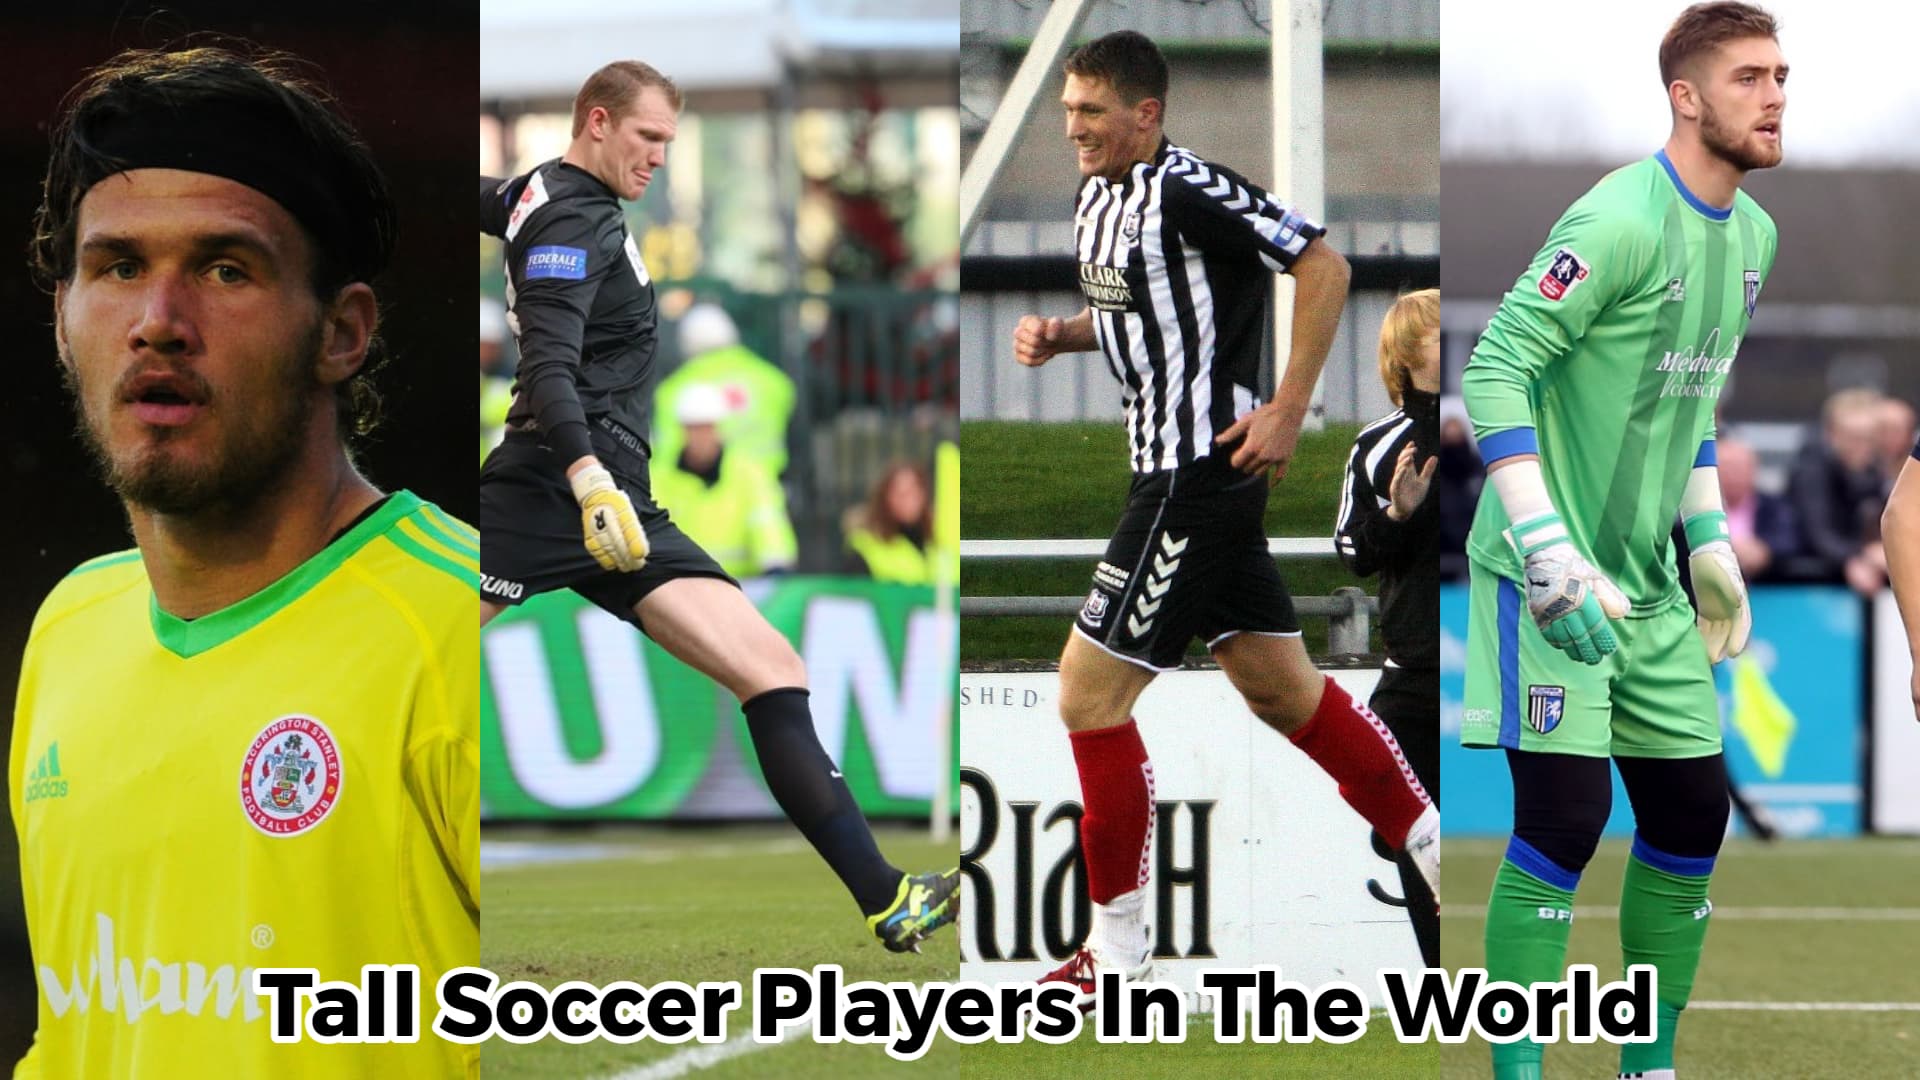 Introducing Top 10 Tall Soccer Players In The World - Simon Bloch Jorgensen, Kristof Van Hout, Paul Millar, Tonny Brogaard